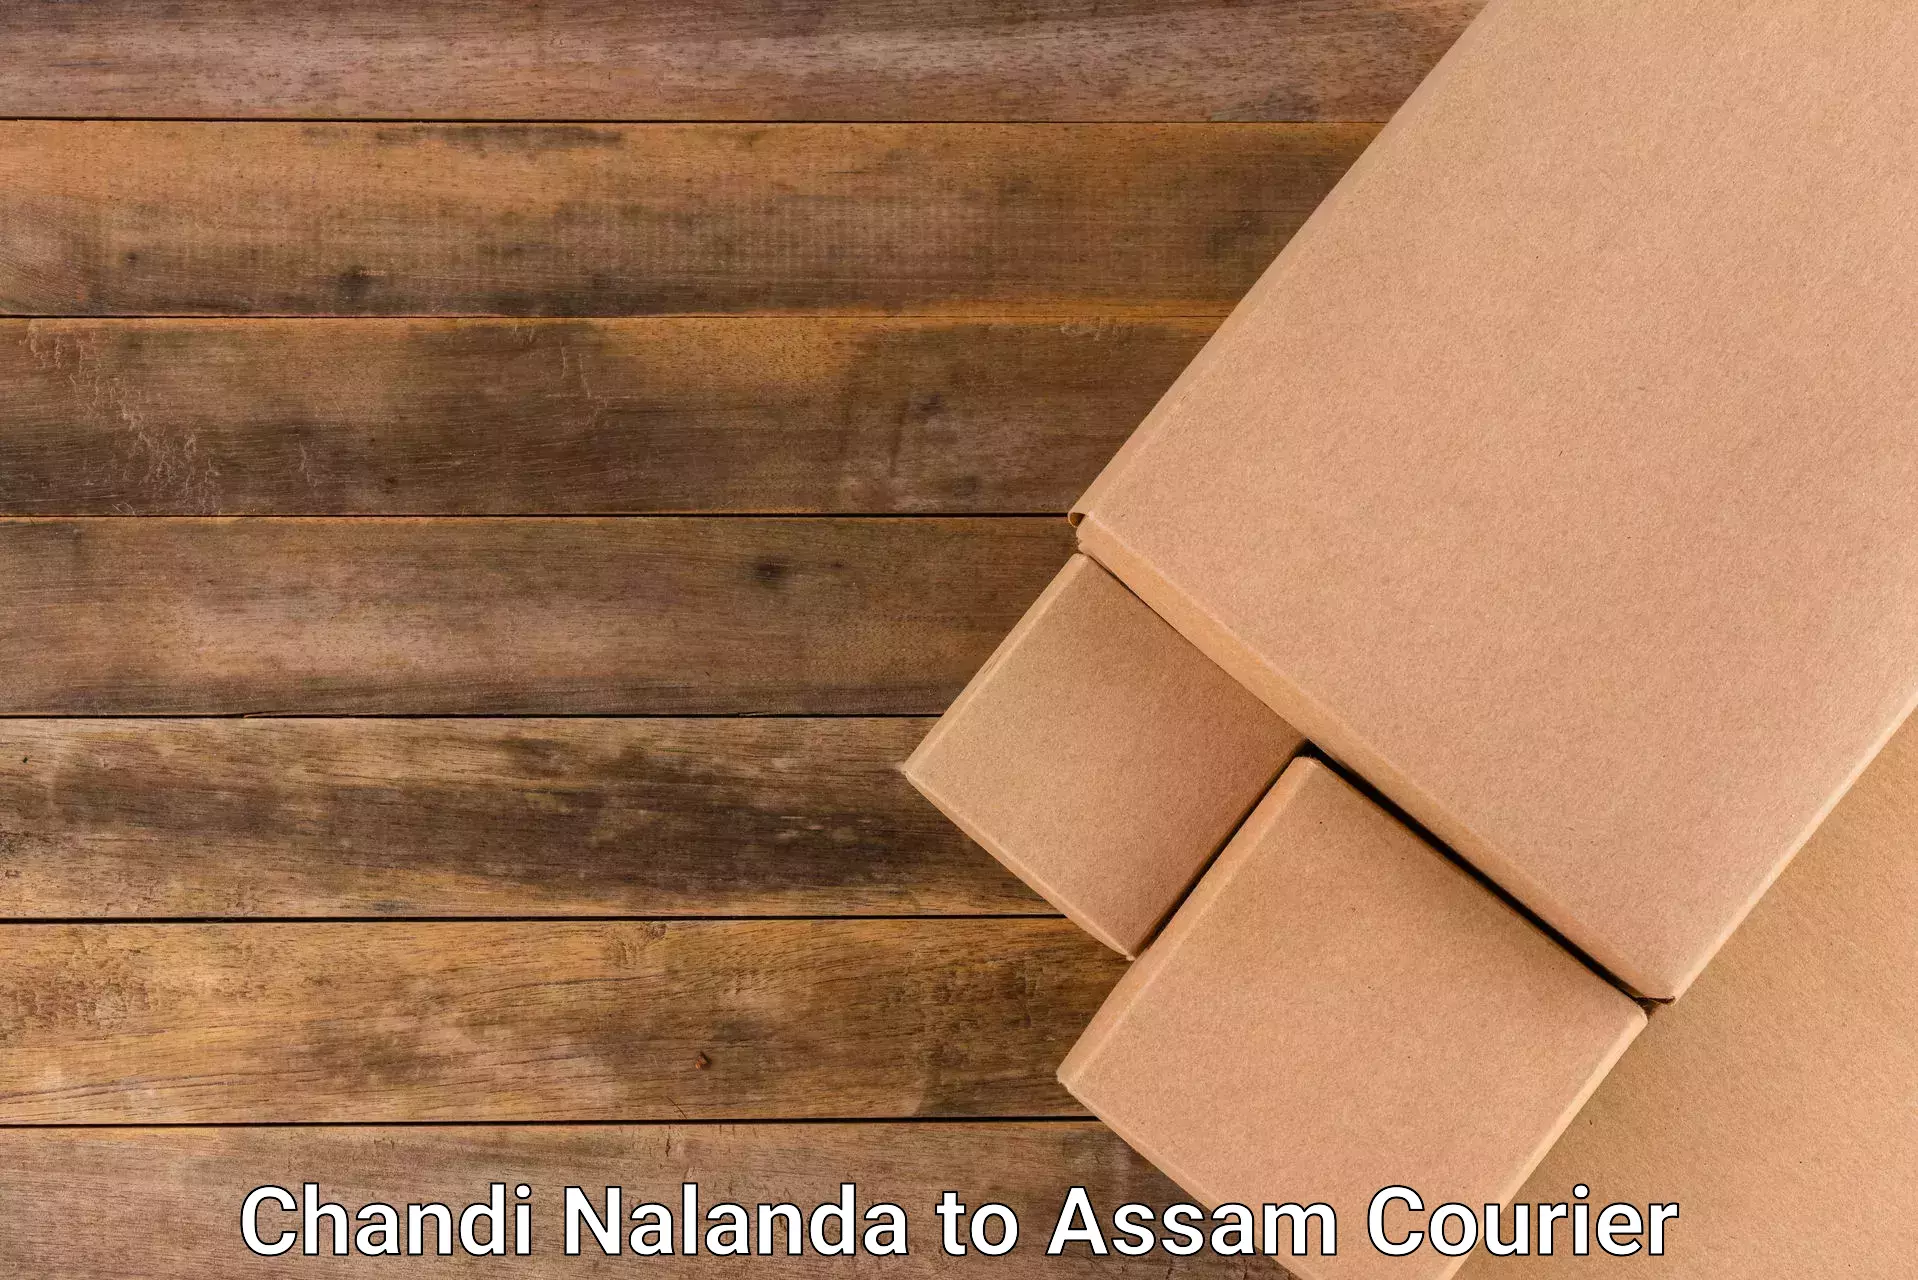 Courier service comparison Chandi Nalanda to Mayang